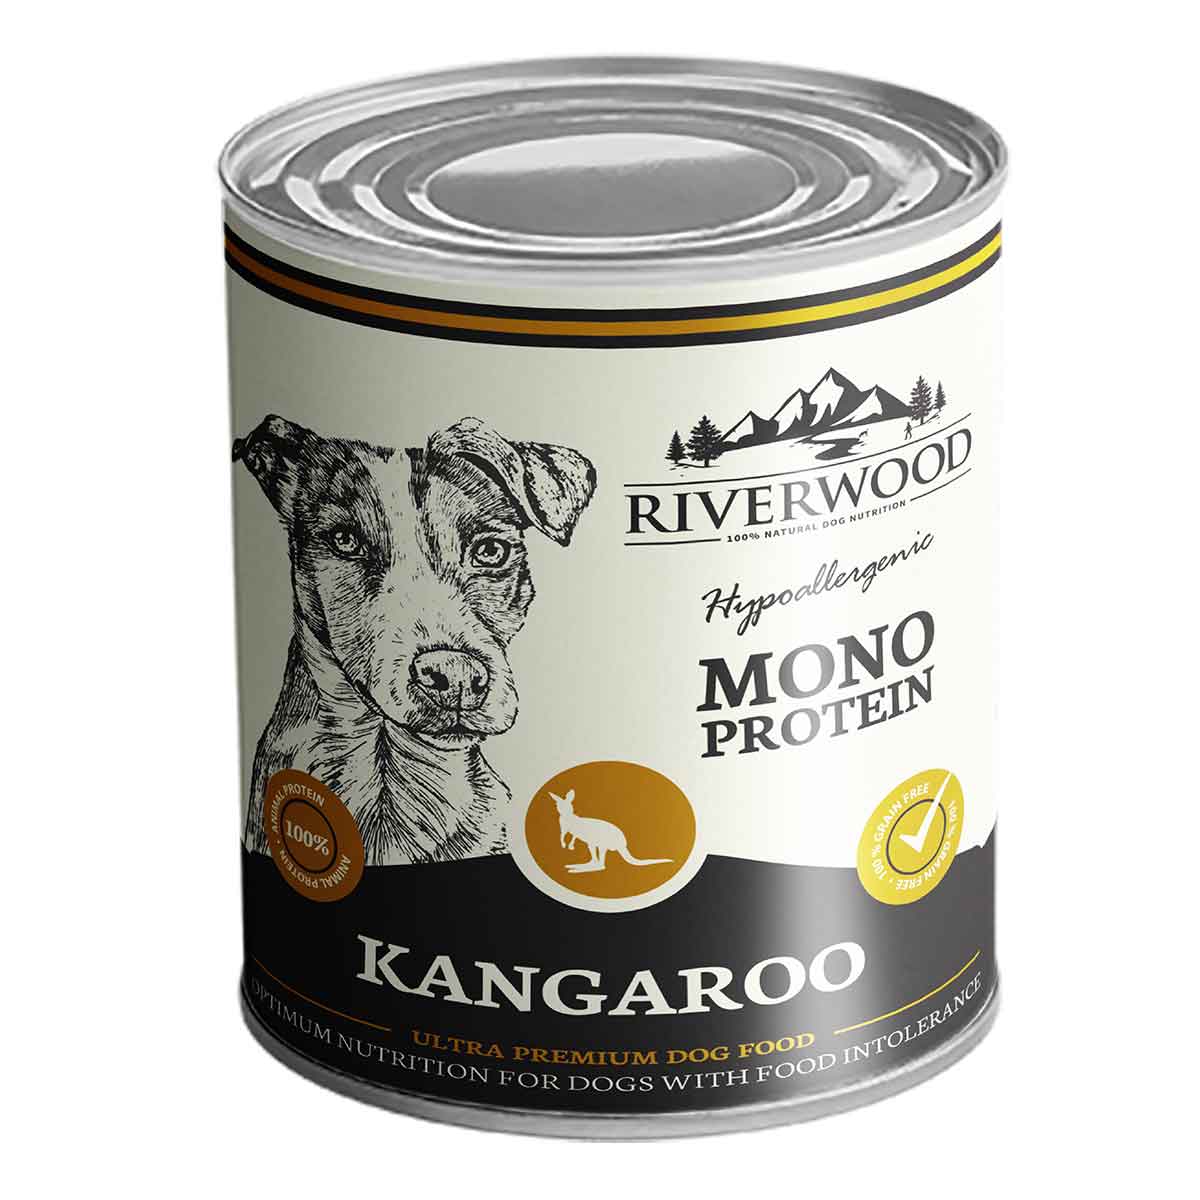 Riverwood Mono Proteine Kangaroo